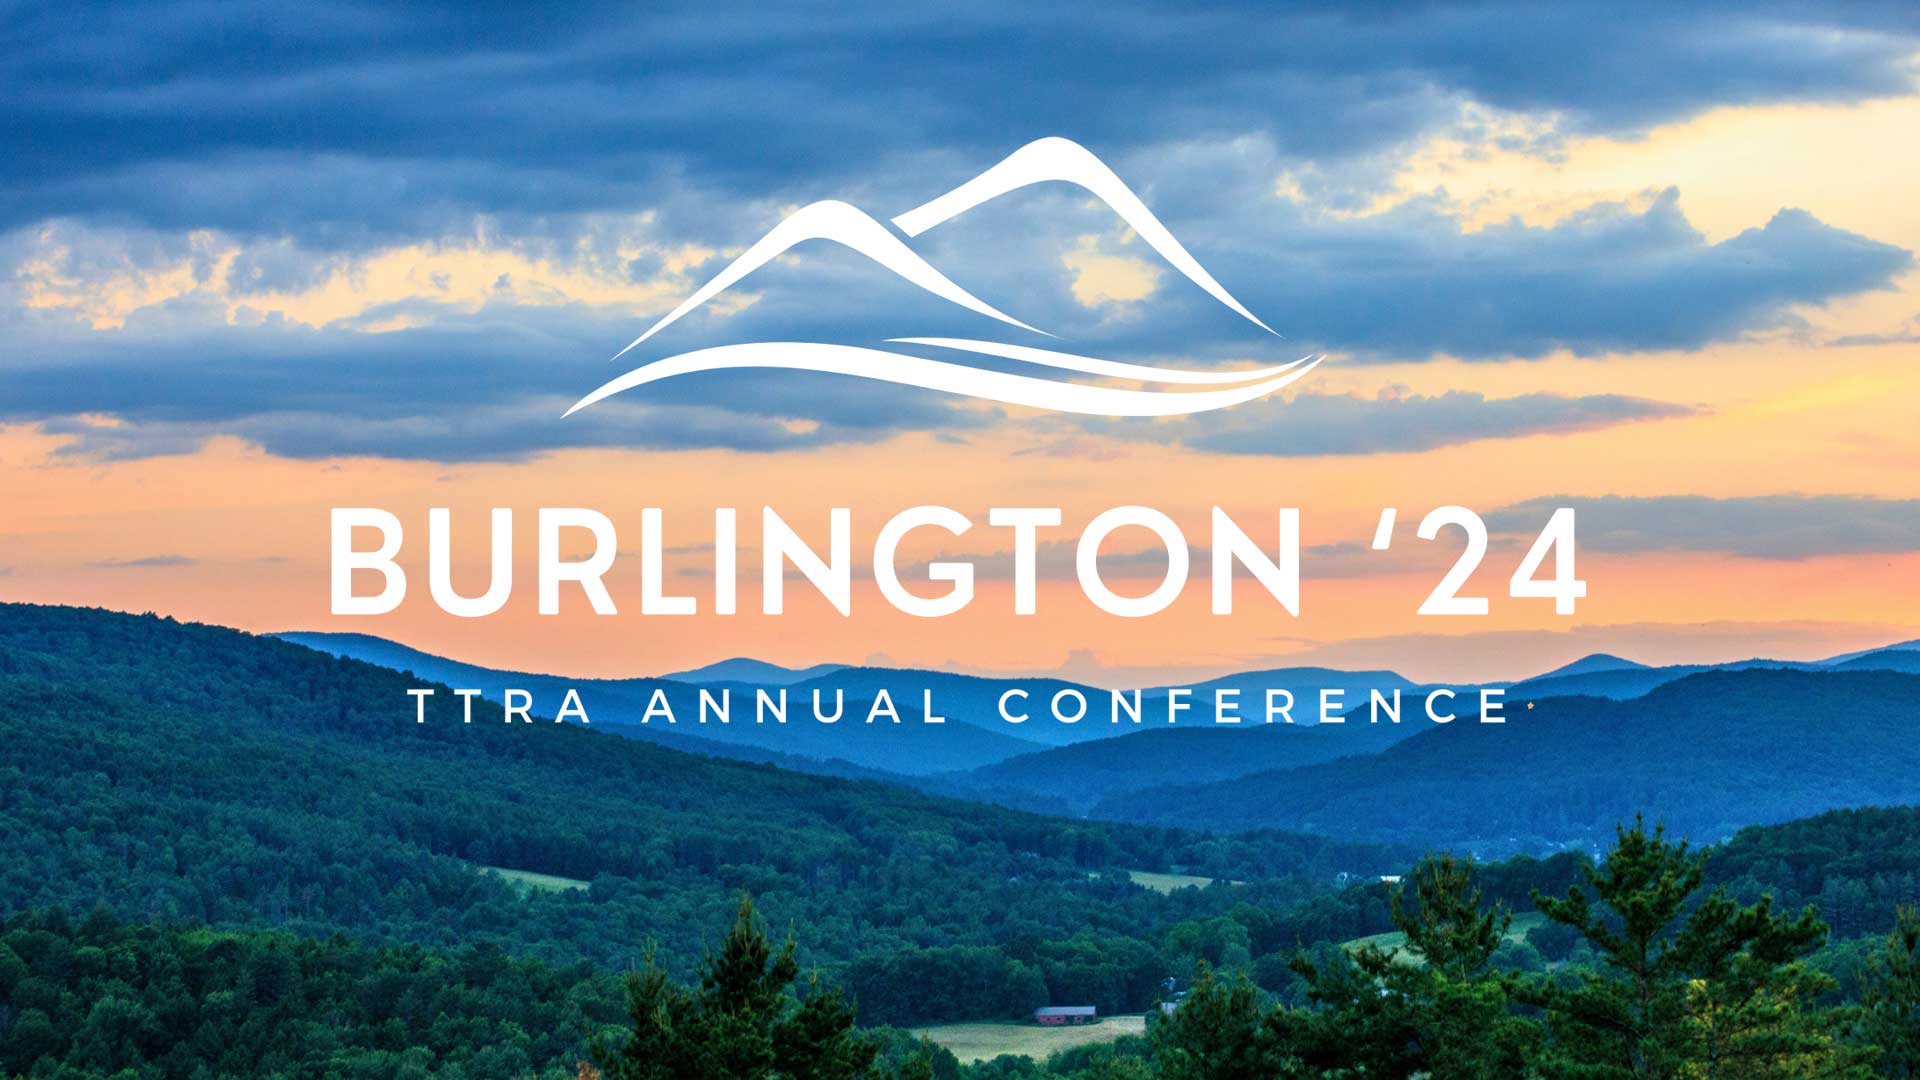 TTRA Annual Conference - Burlington '24